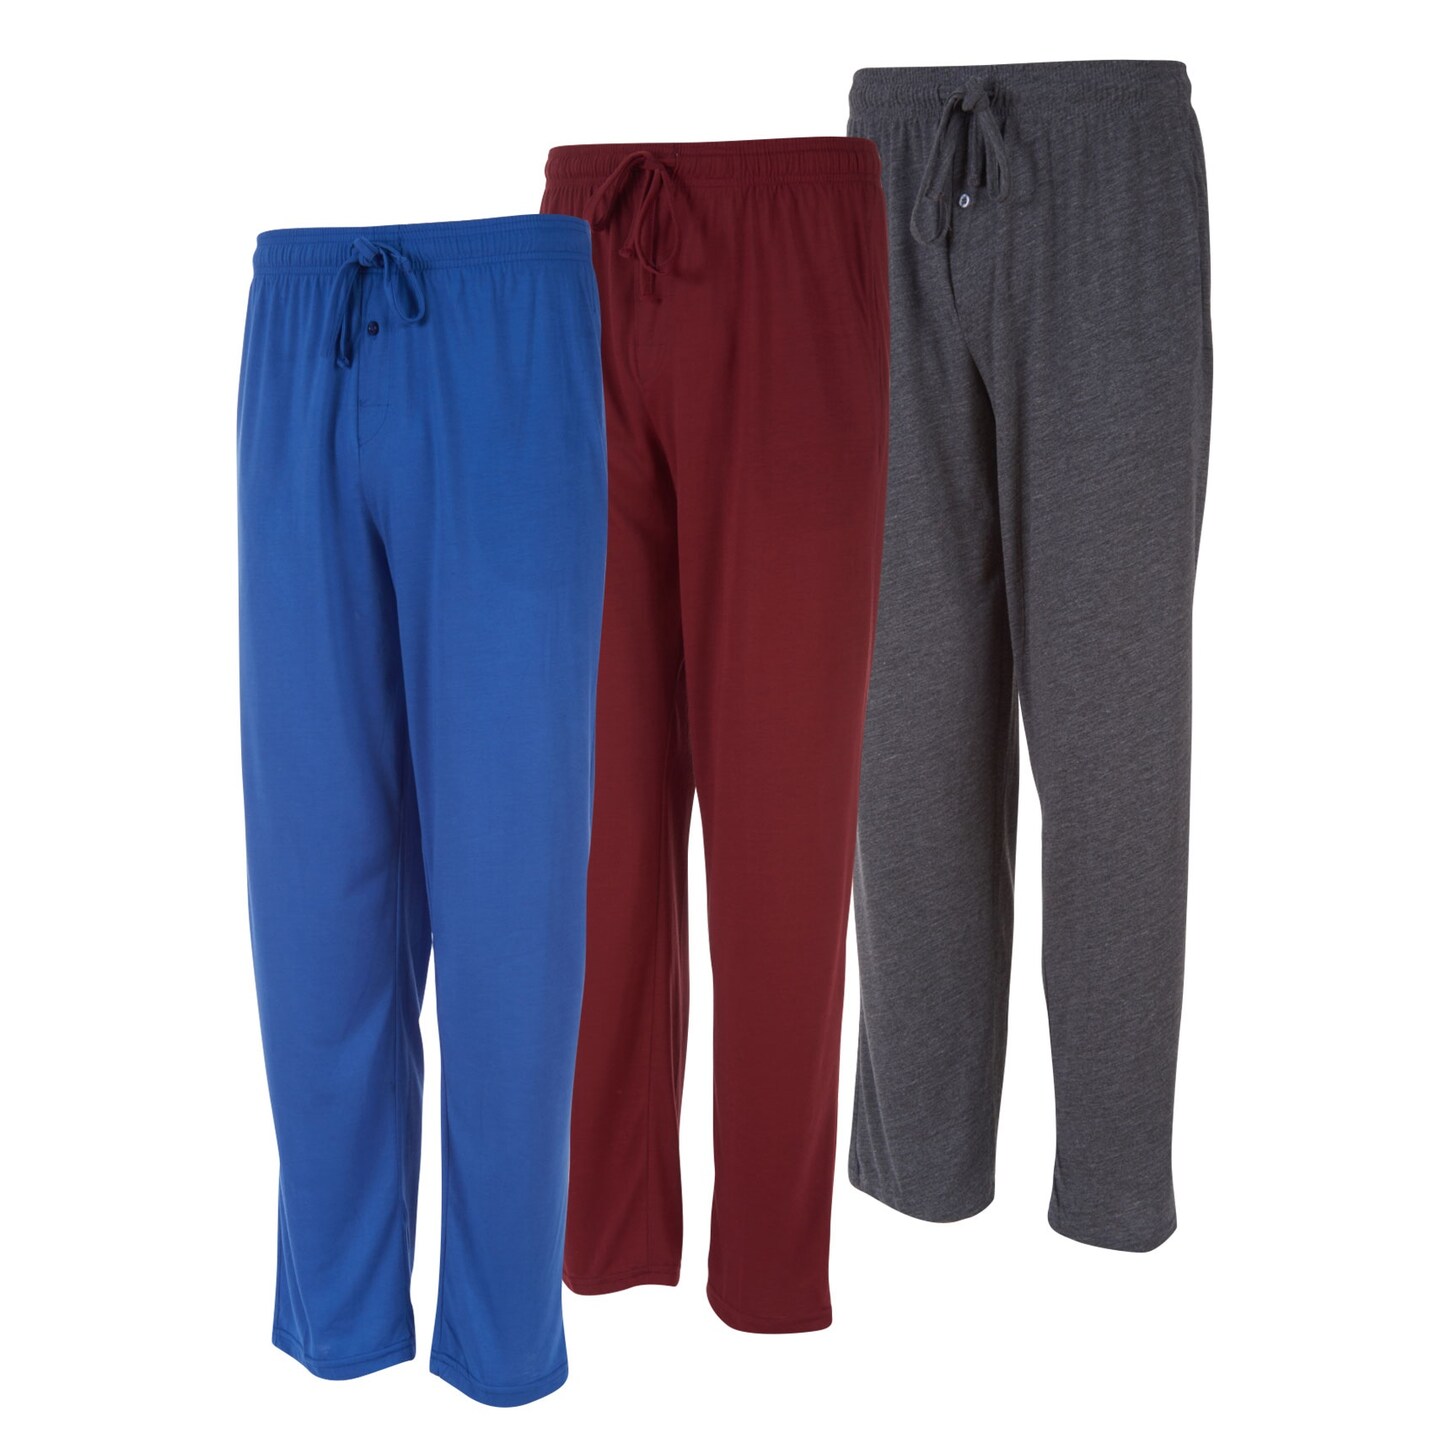 Men's Lounge Pants - Soft Cotton Jersey Knit Lounge Bottoms, Pajama Pants  With 2 Deep Side Pockets, 3-Pack